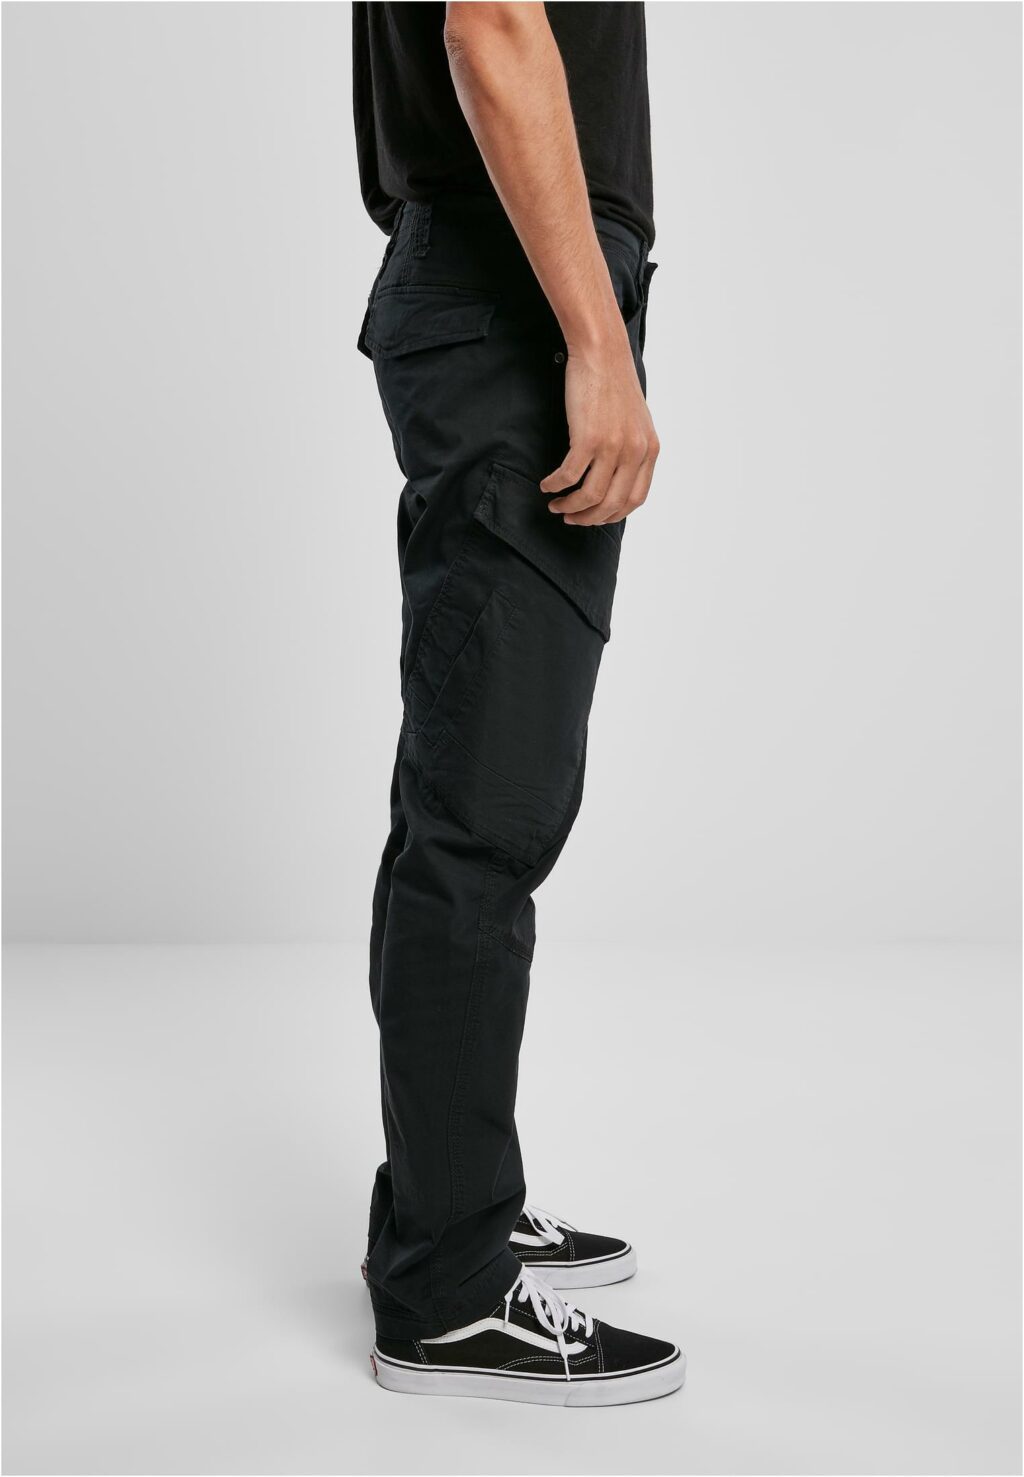 Brandit Adven Slim Fit Cargo Pants black BD9470